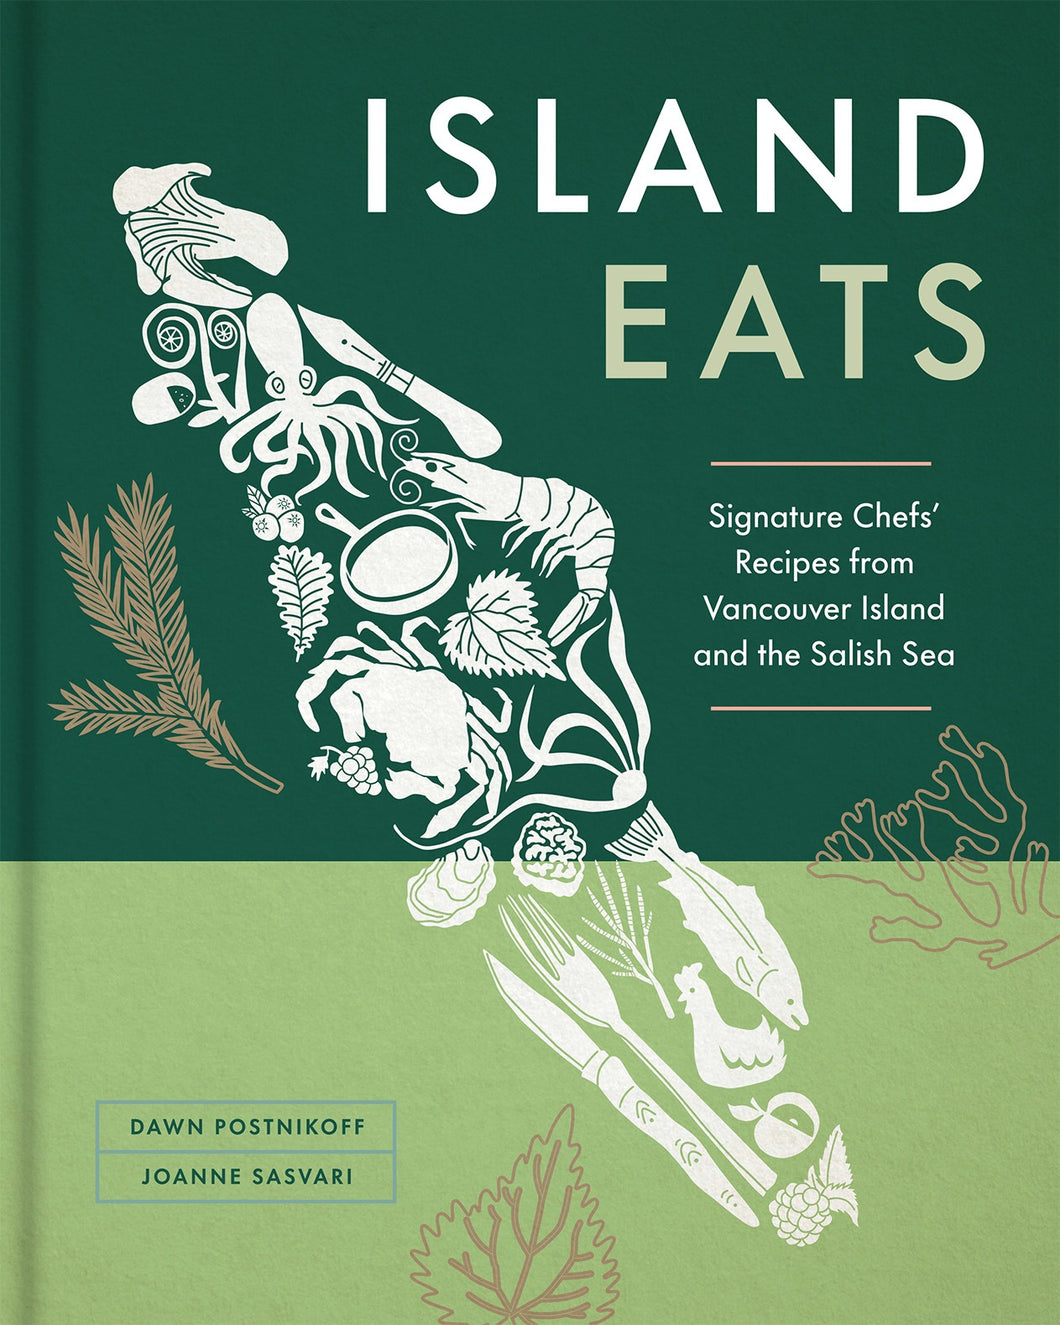 Island Eats by Dawn Postnikoff & Joanne Sasvari